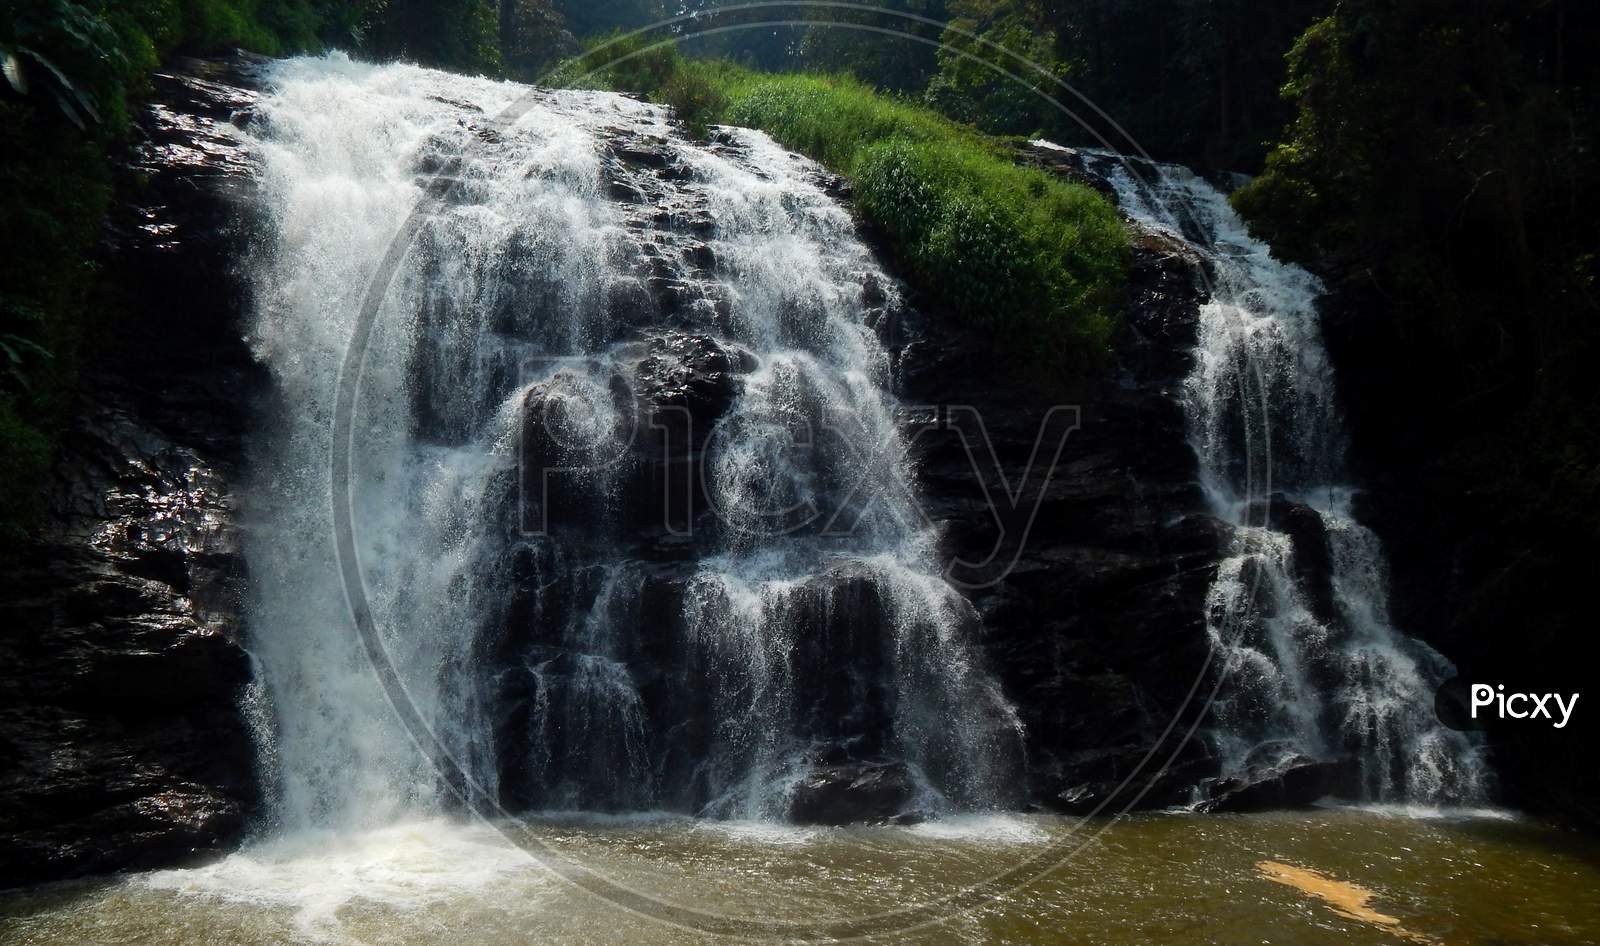 Abbey Falls Madikeri , Krnataka, India. Beautiful waterfall in the forest.